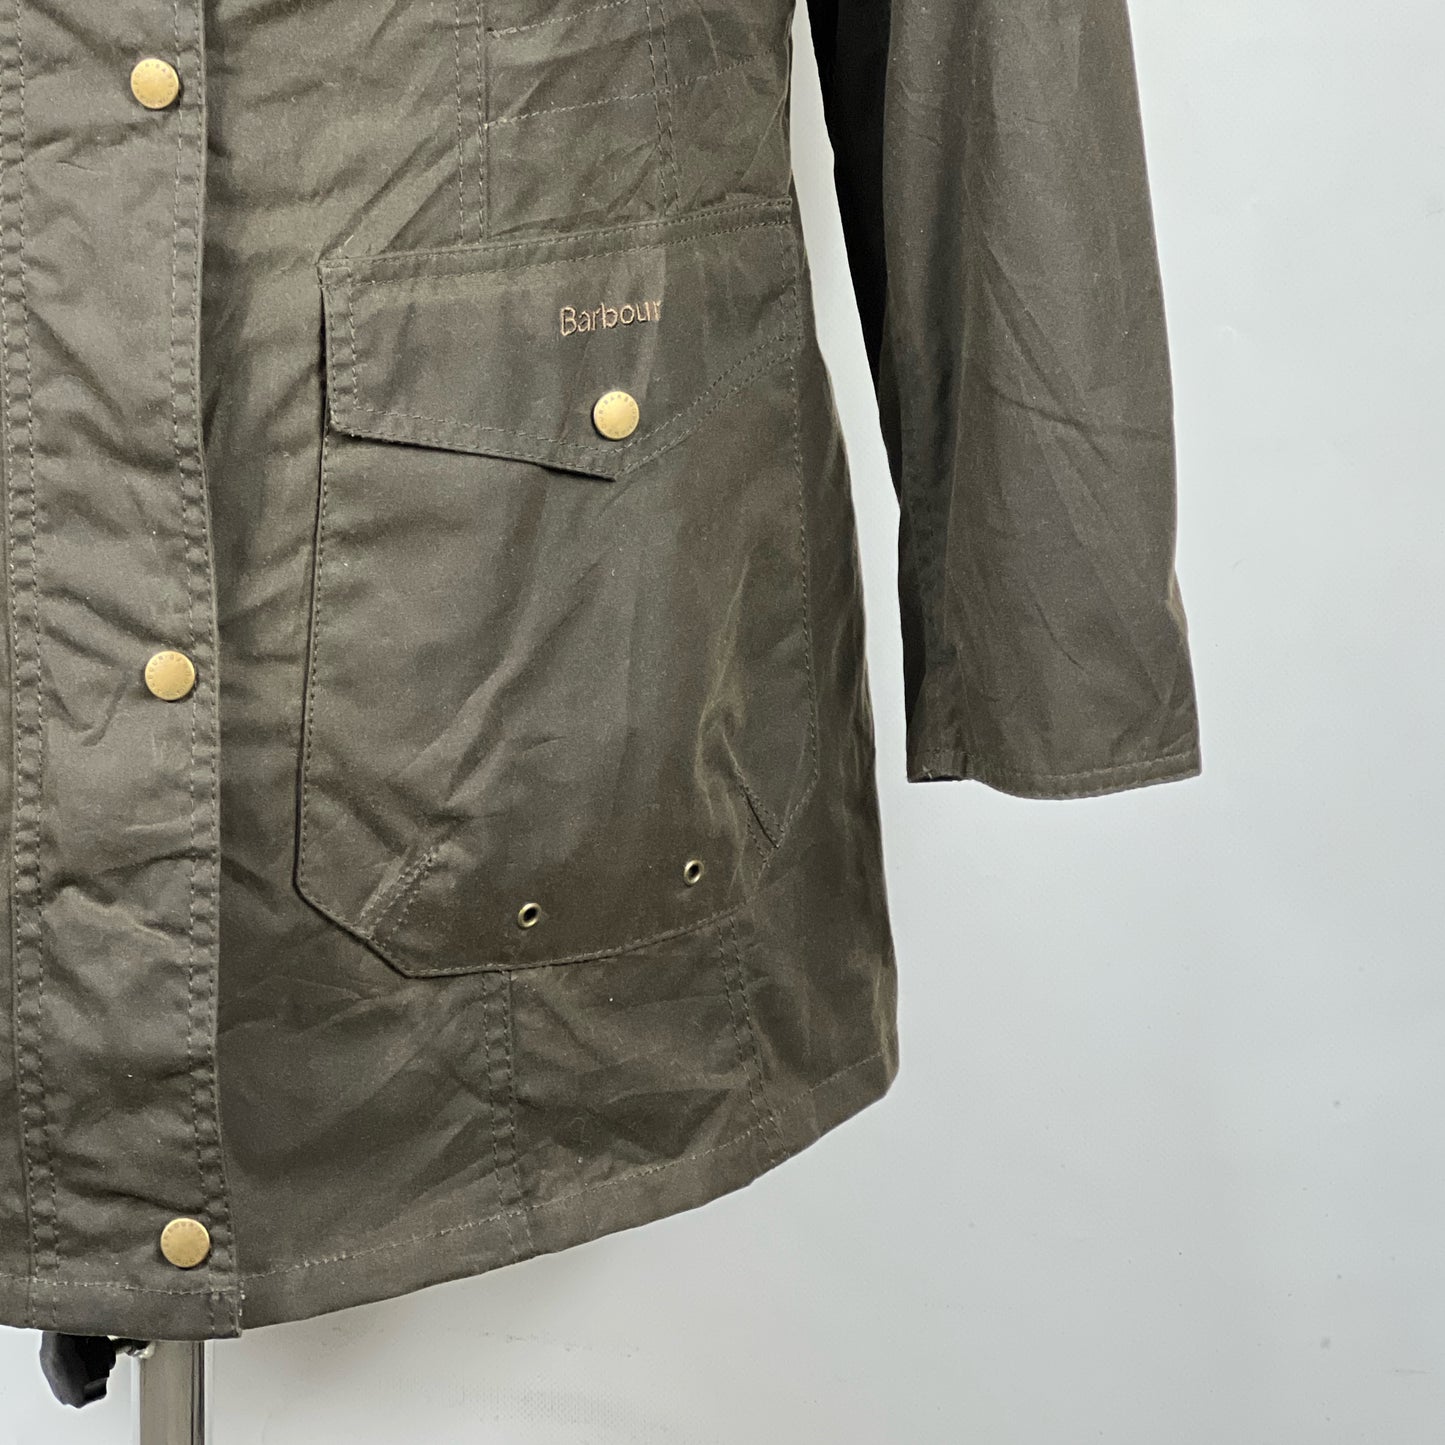 Giacca Barbour verde imbottita con cappuccio UK14 -Green wax jacket size UK14 tg. 42